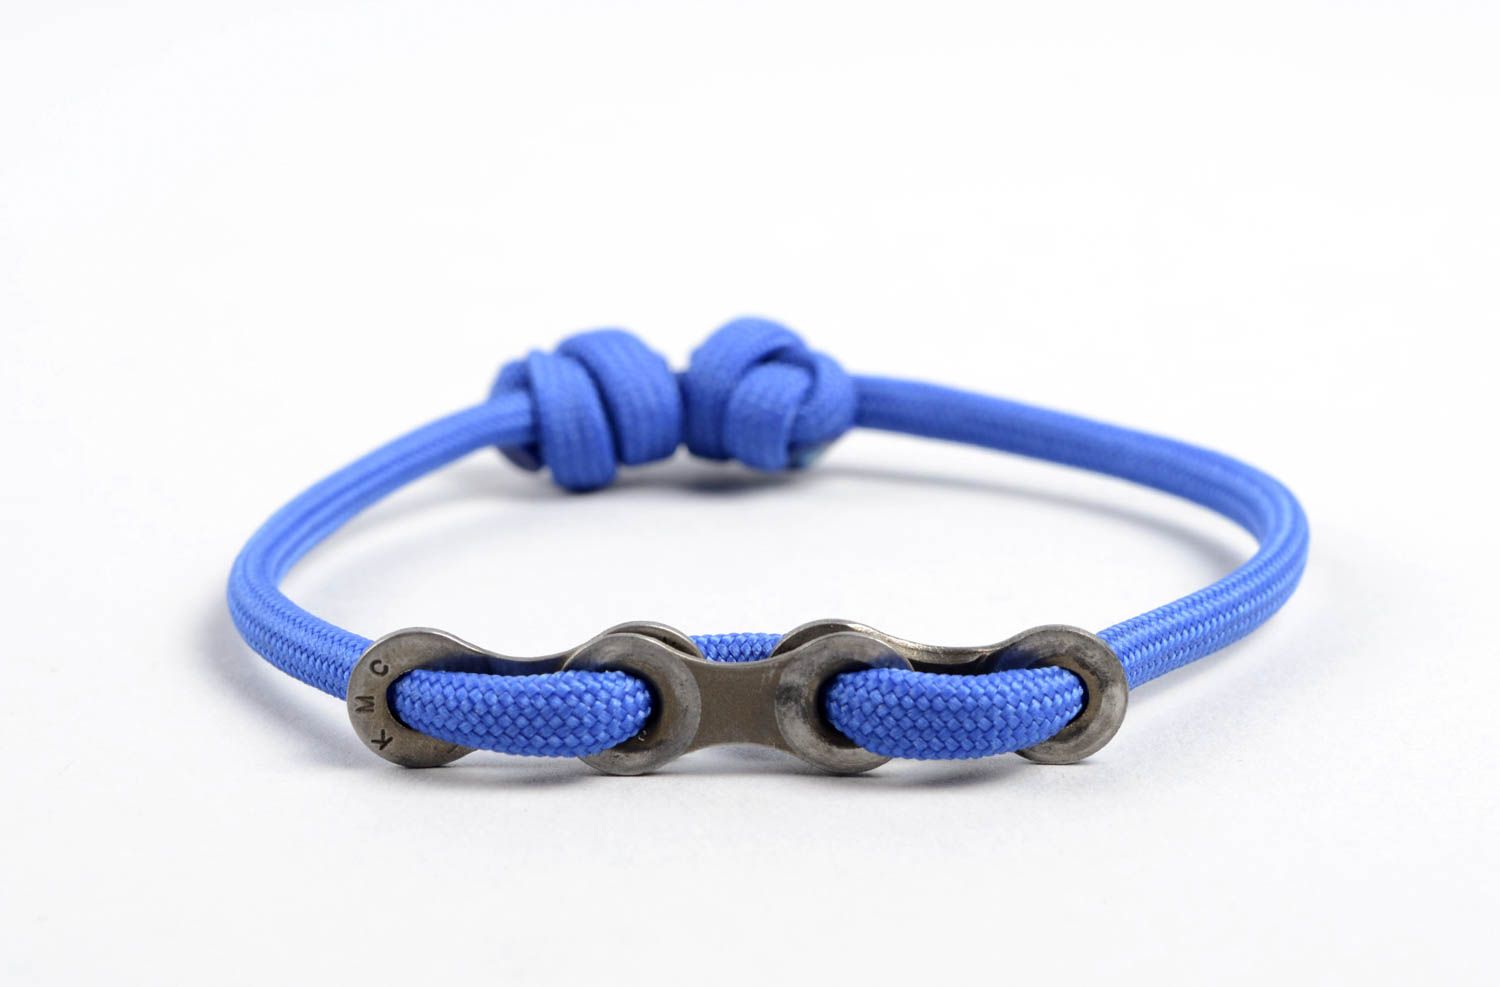 Stylish handmade wrist bracelet designs paracord bracelet textile jewelry photo 4